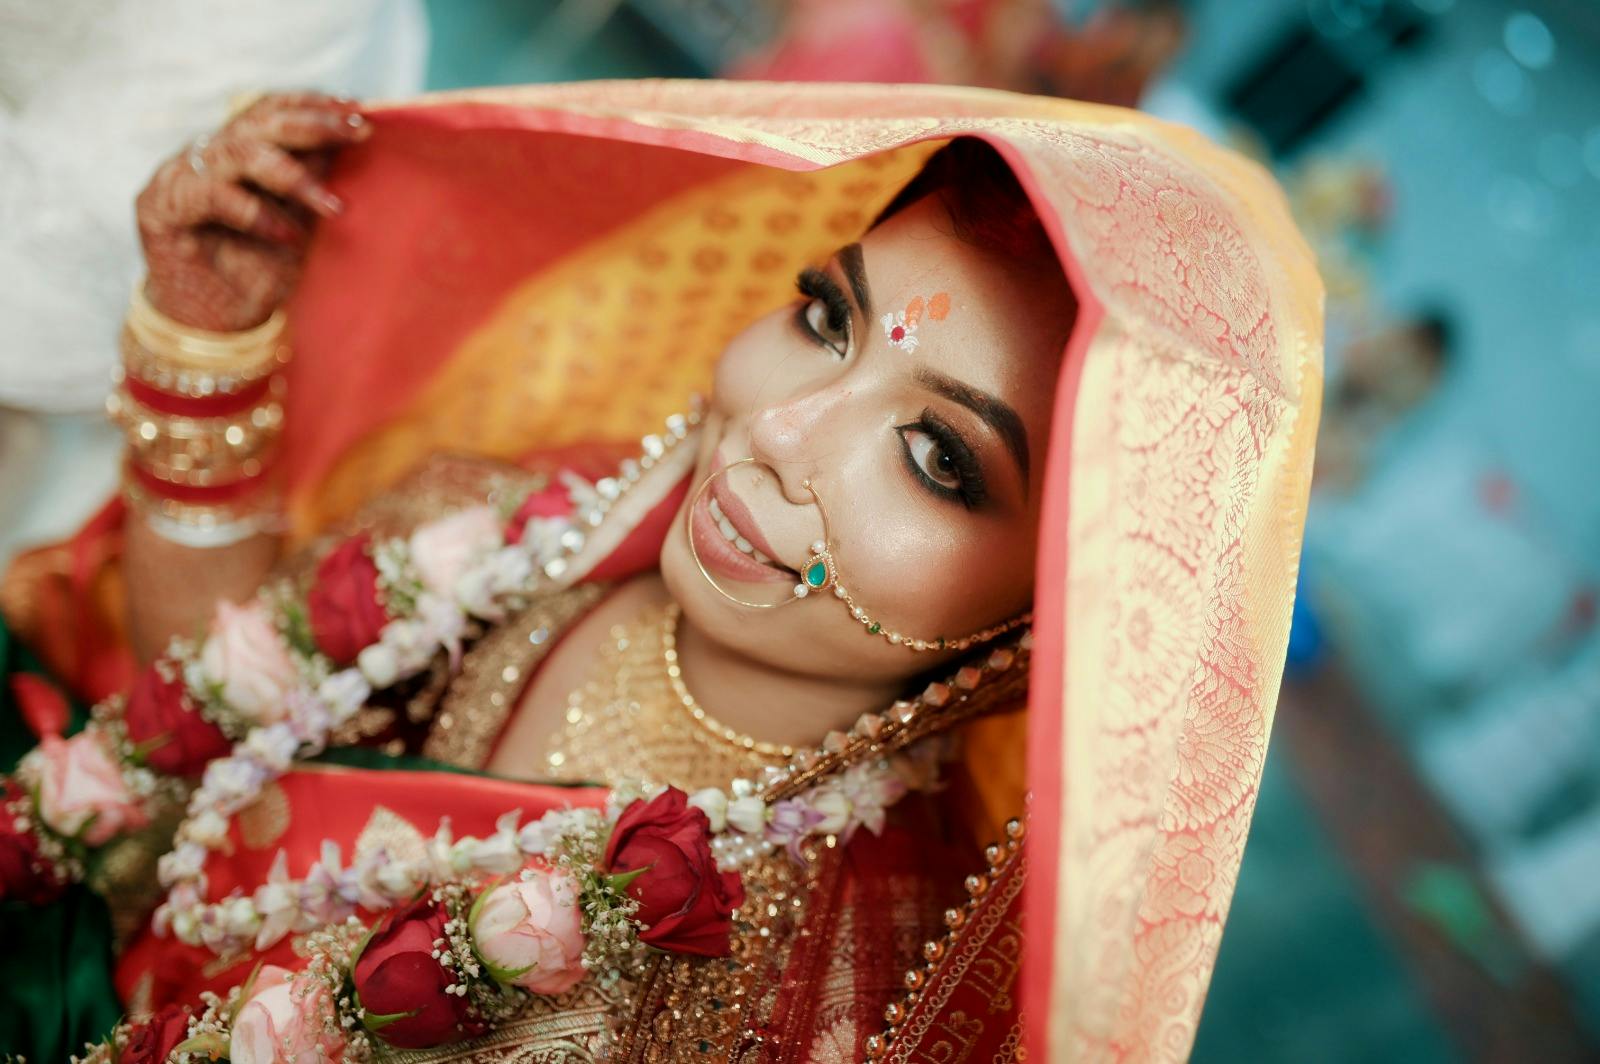 Best wedding photographers by Birdlens Creation
Birdlens Creation